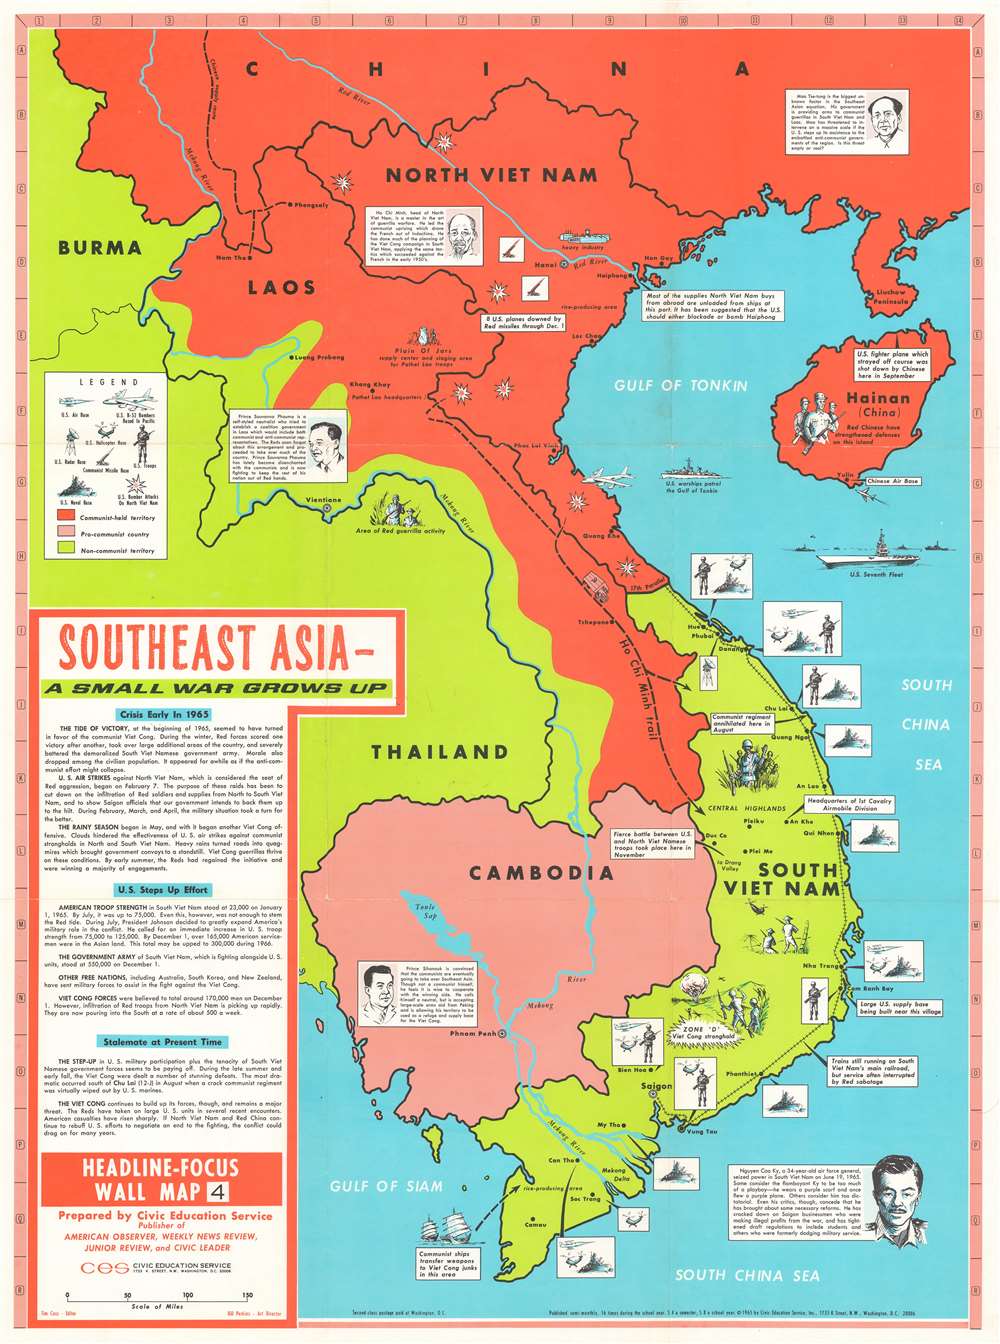 Southeast Asia A Small War Grows Up Headline Focus Wall Map 4